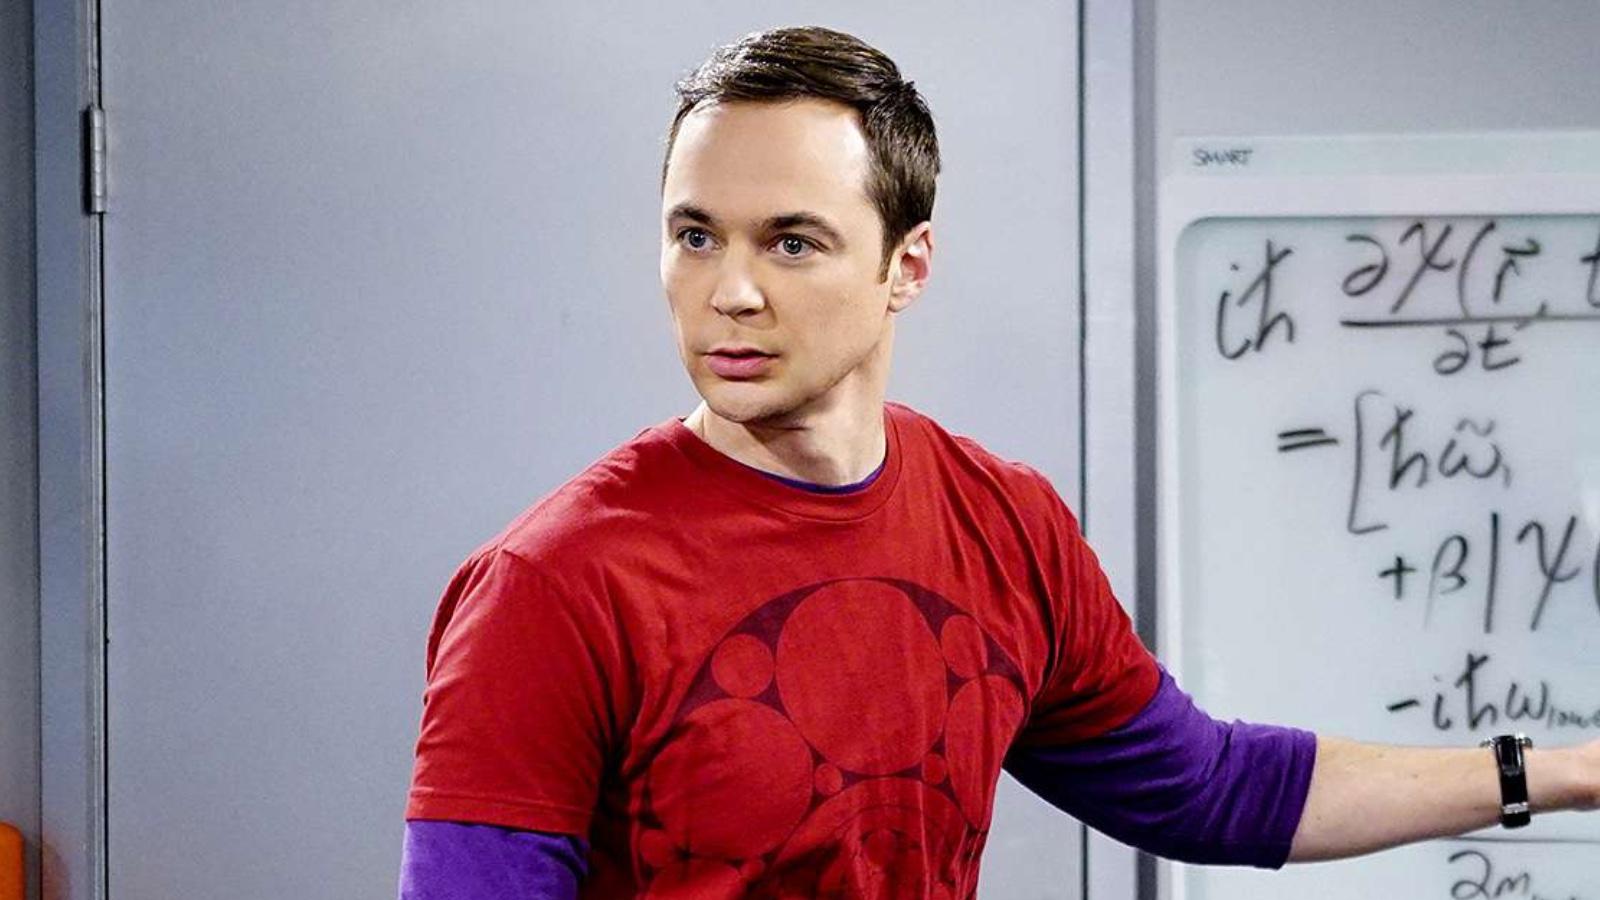 Jim Parsons in The Big Bang Theory as Sheldon Cooper.